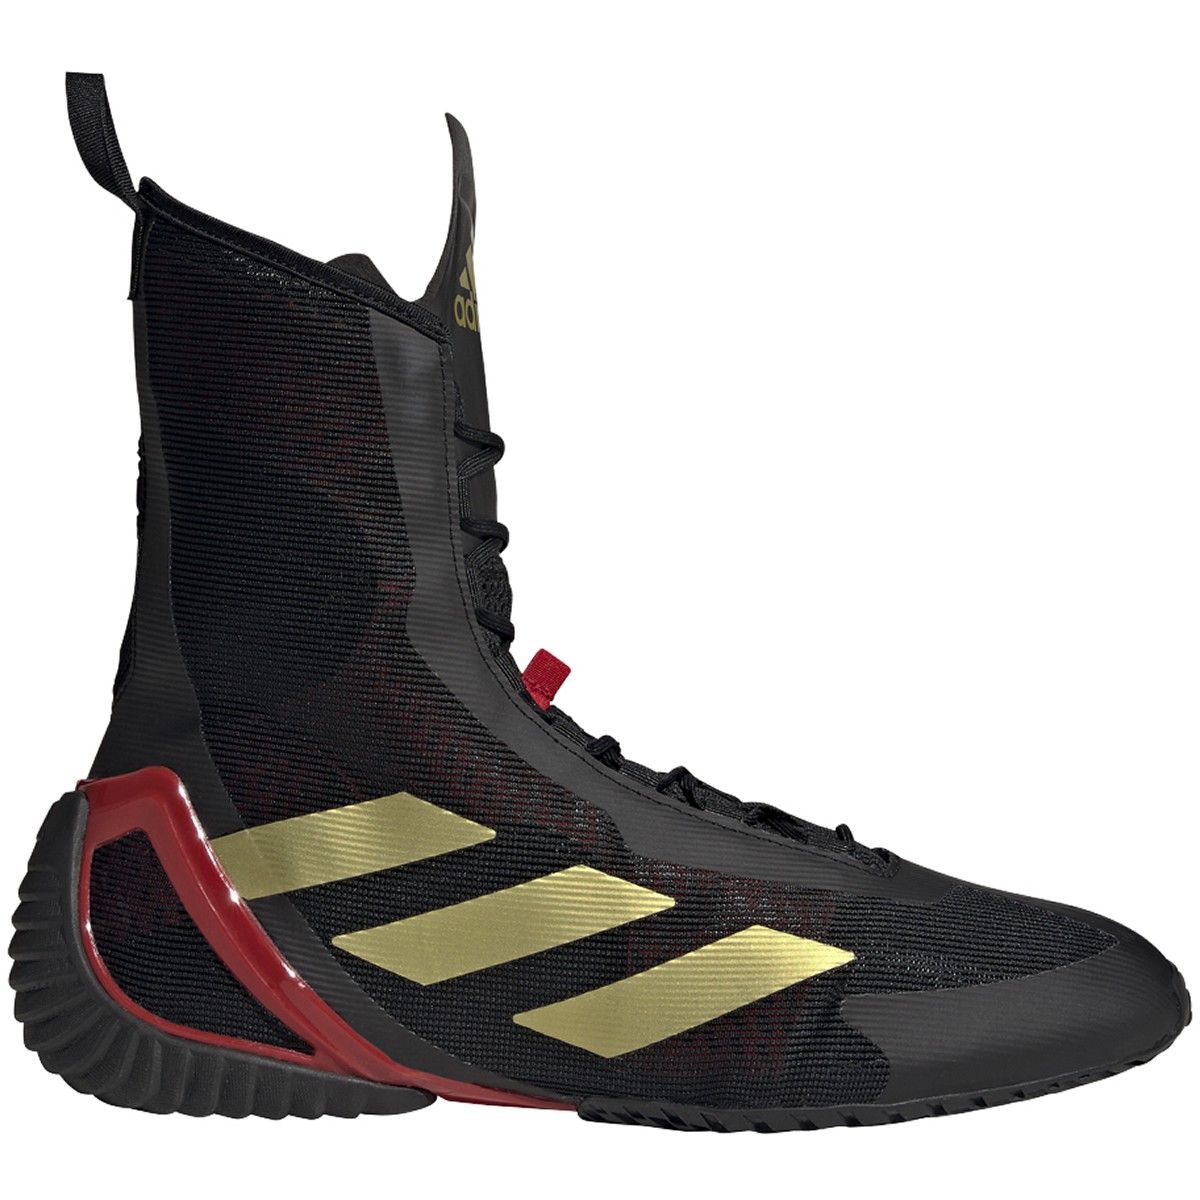 Buy Boxing Boots | Nike, Adidas, Everlast Boxing Boots | Boxfit